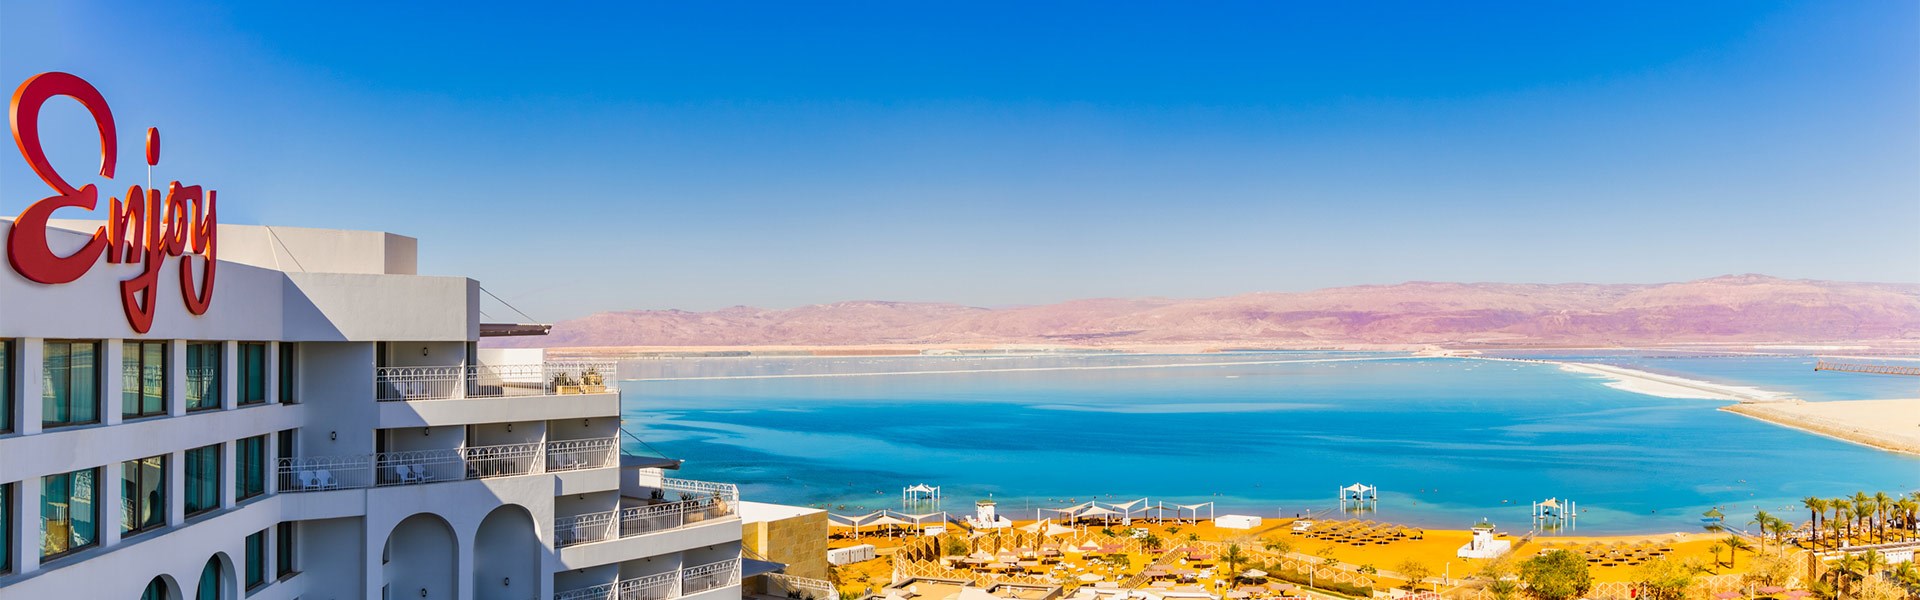 Enjoy Dead Sea Hotel - Gallery